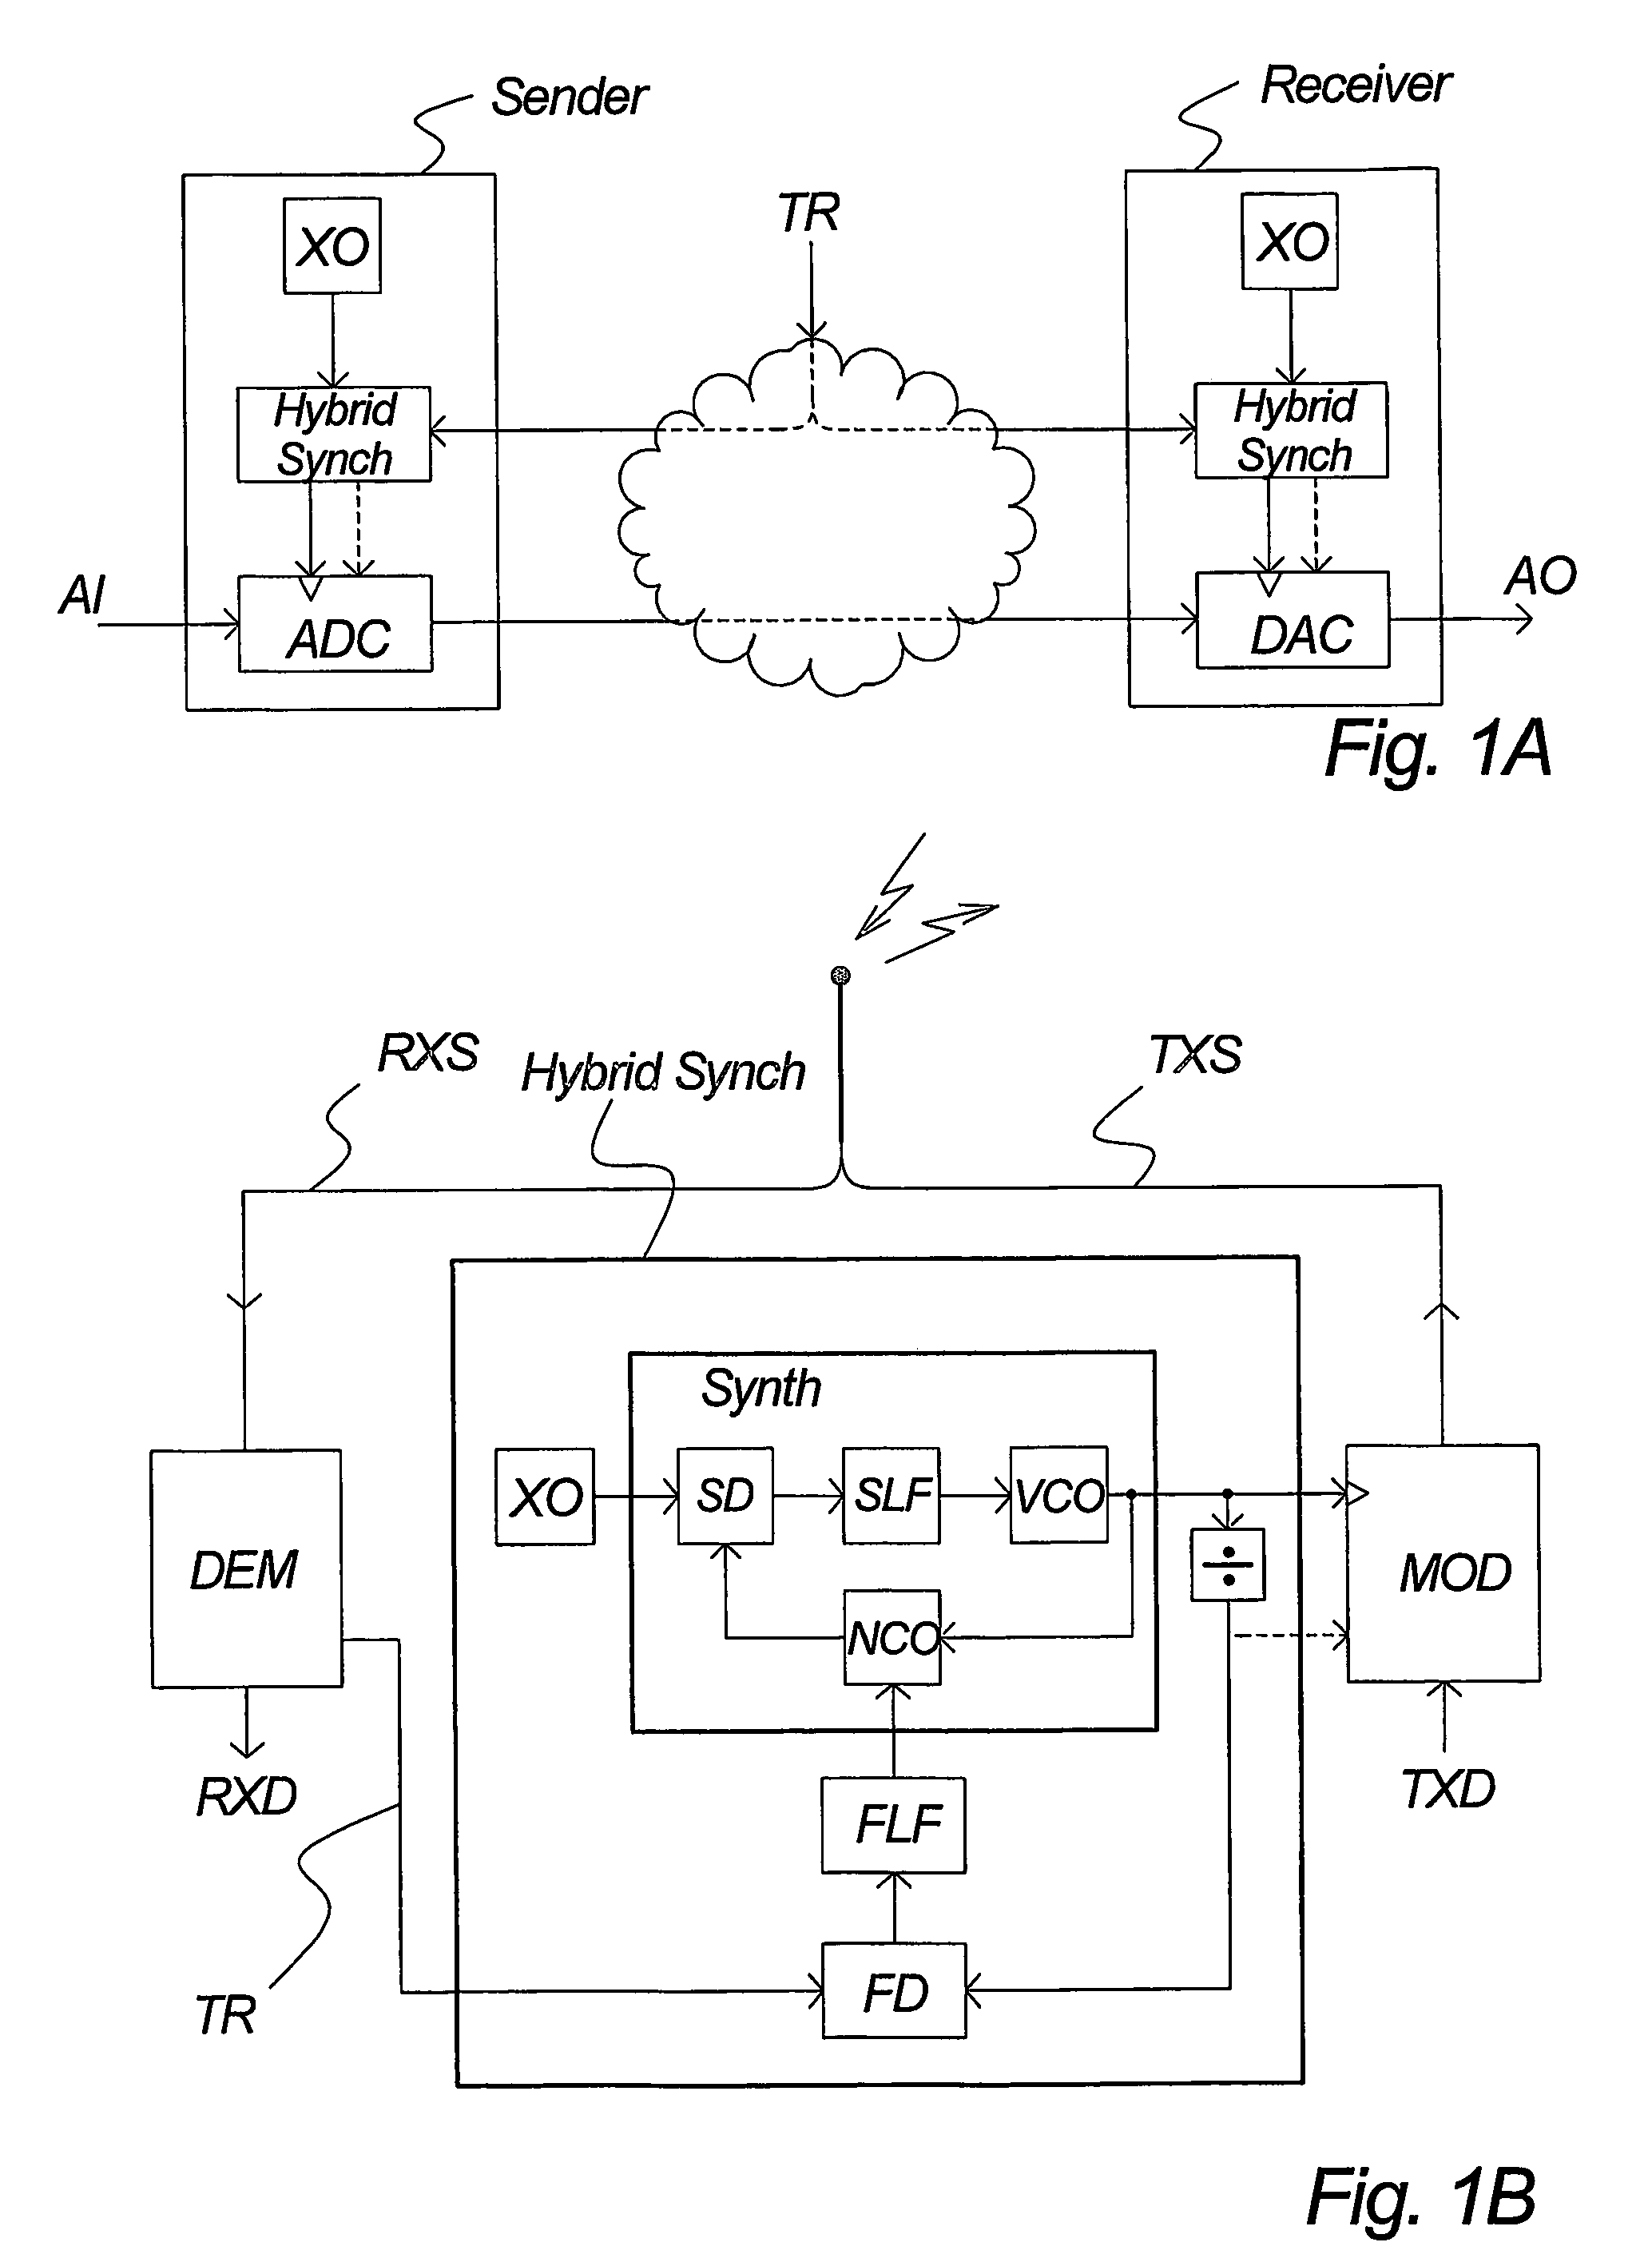 Method of establishing an oscillator clock signal